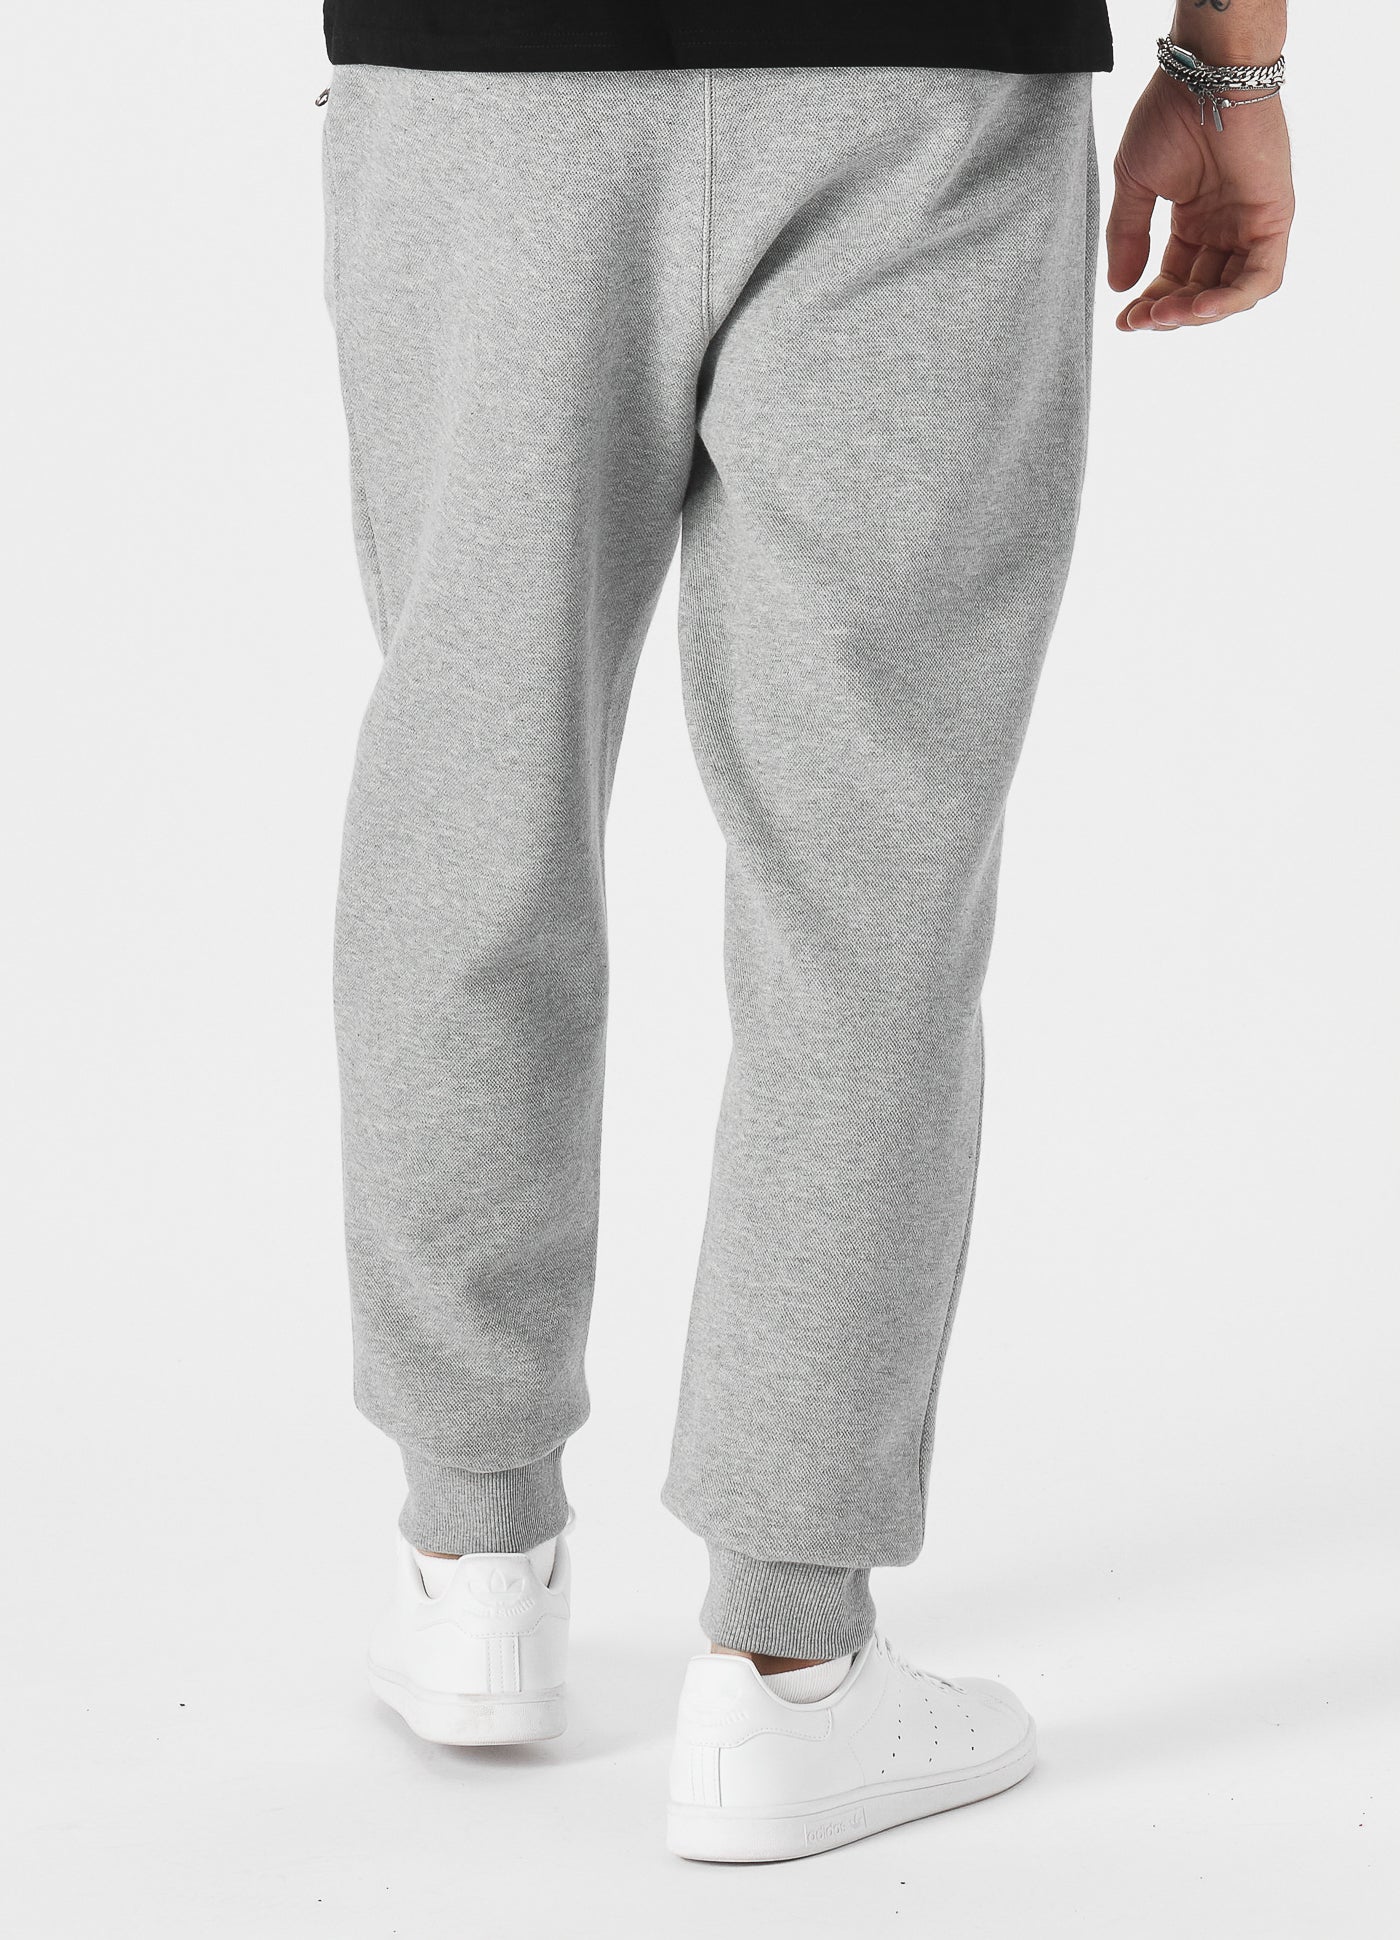 Jockey Men's Cotton Track Pants Modern Fit Sports Premium Combed Cotton  Bottom | eBay